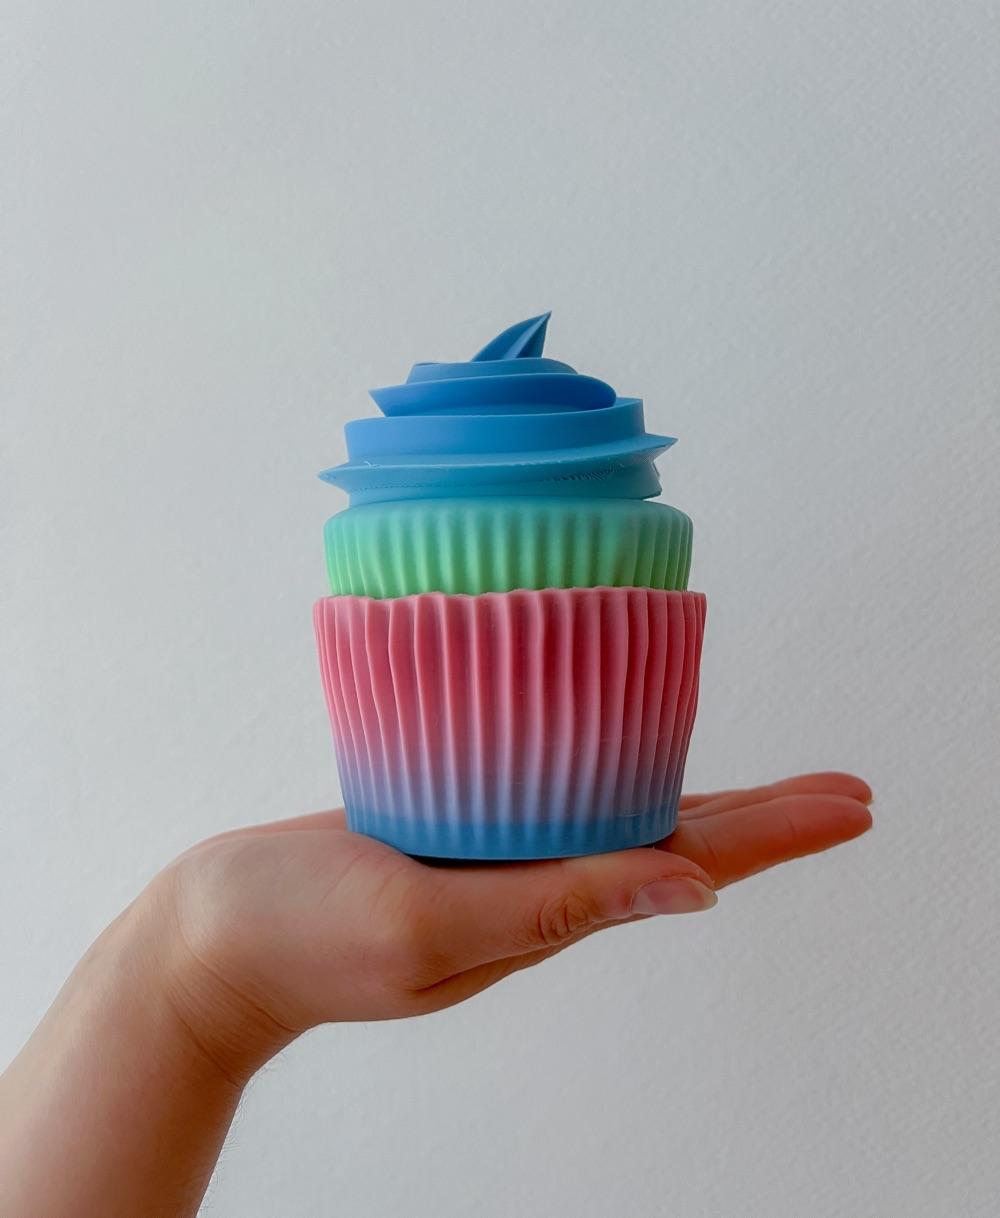 Cupcake #1 - 150% size!
Isanmate rainbow filament. - 3d model